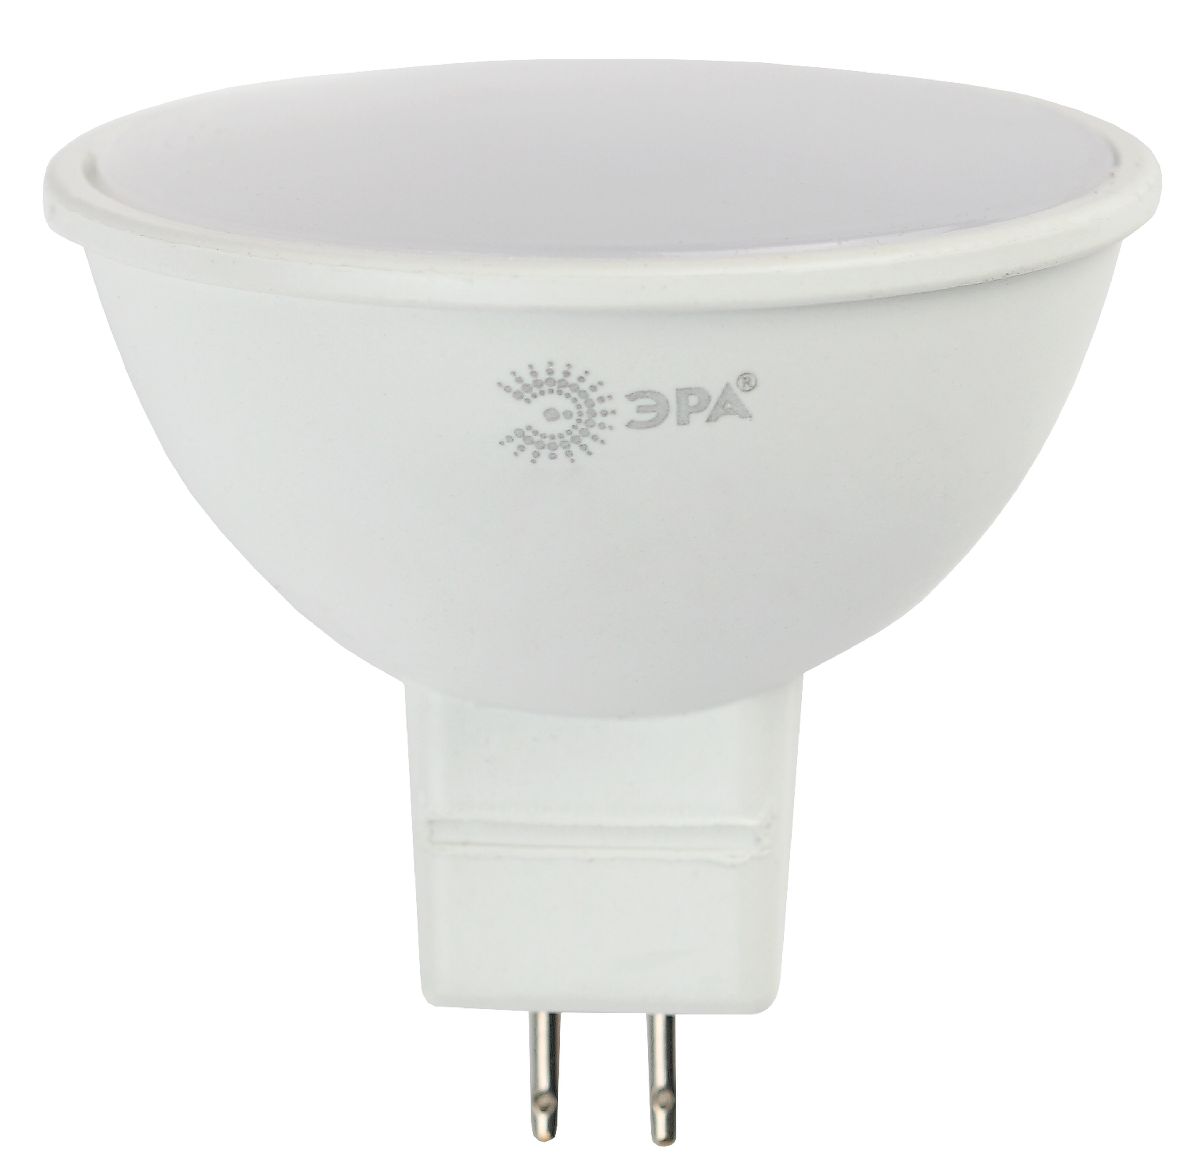 Лампа светодиодная Эра GU5.3 8W 6000K LED MR16-8W-12V-860-GU5.3 Б0049095